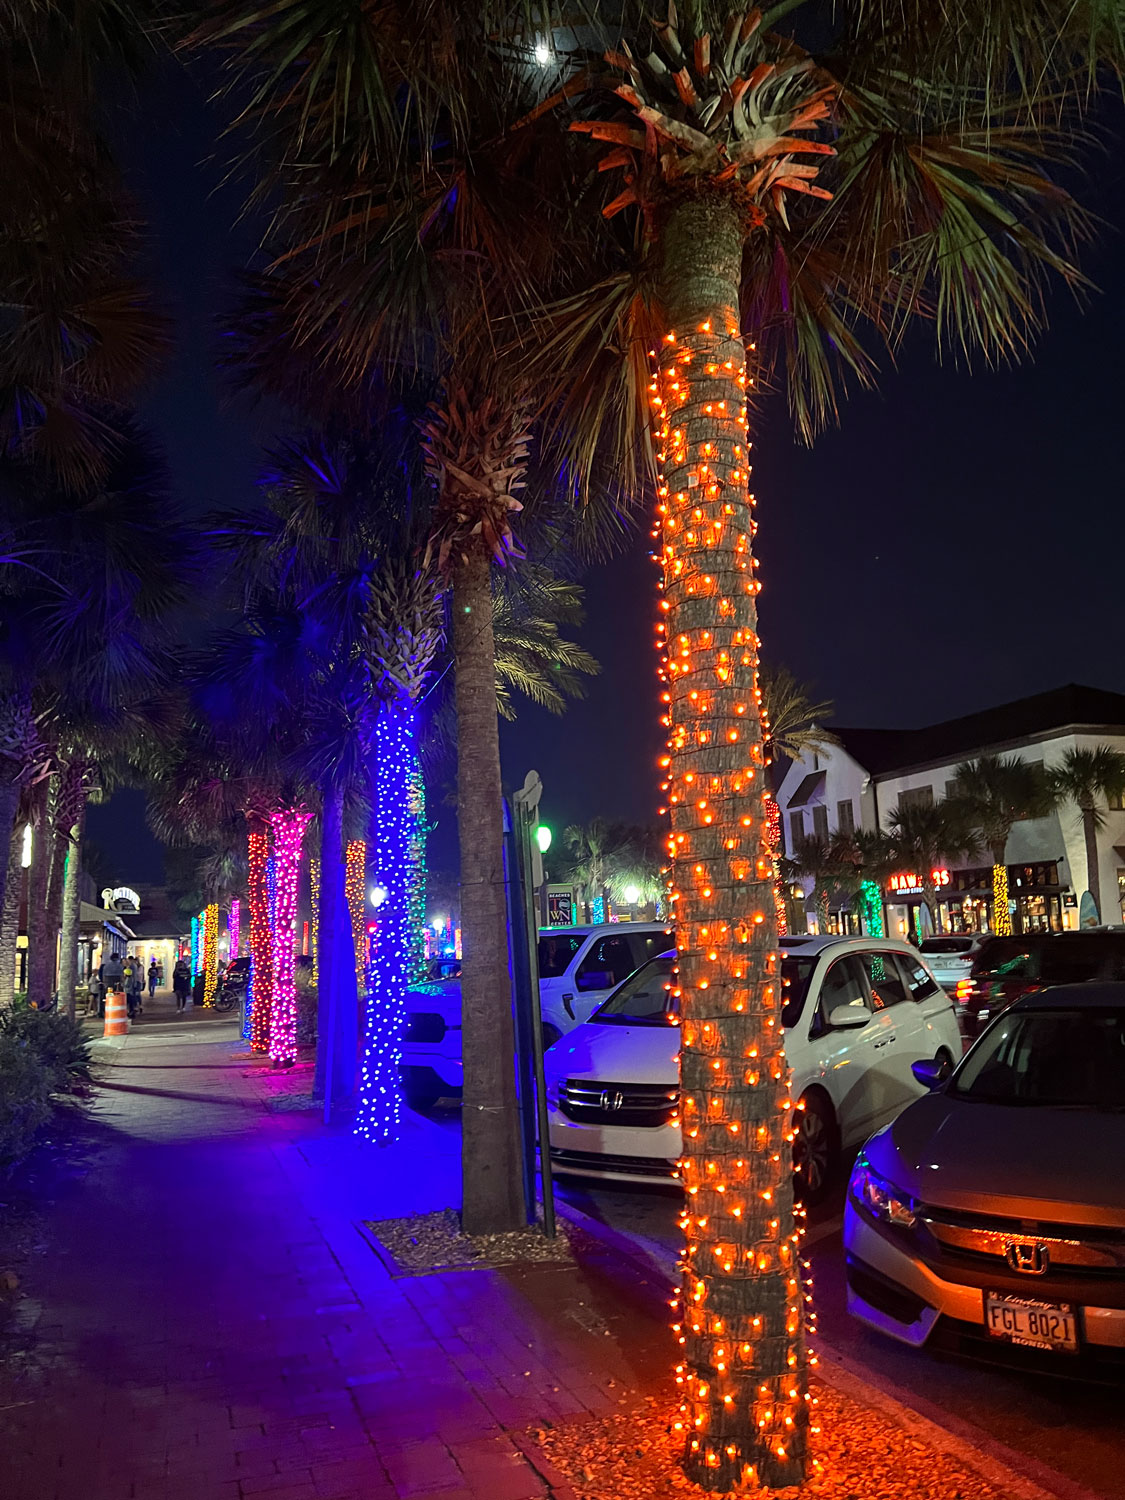 birghtly lit palm trees